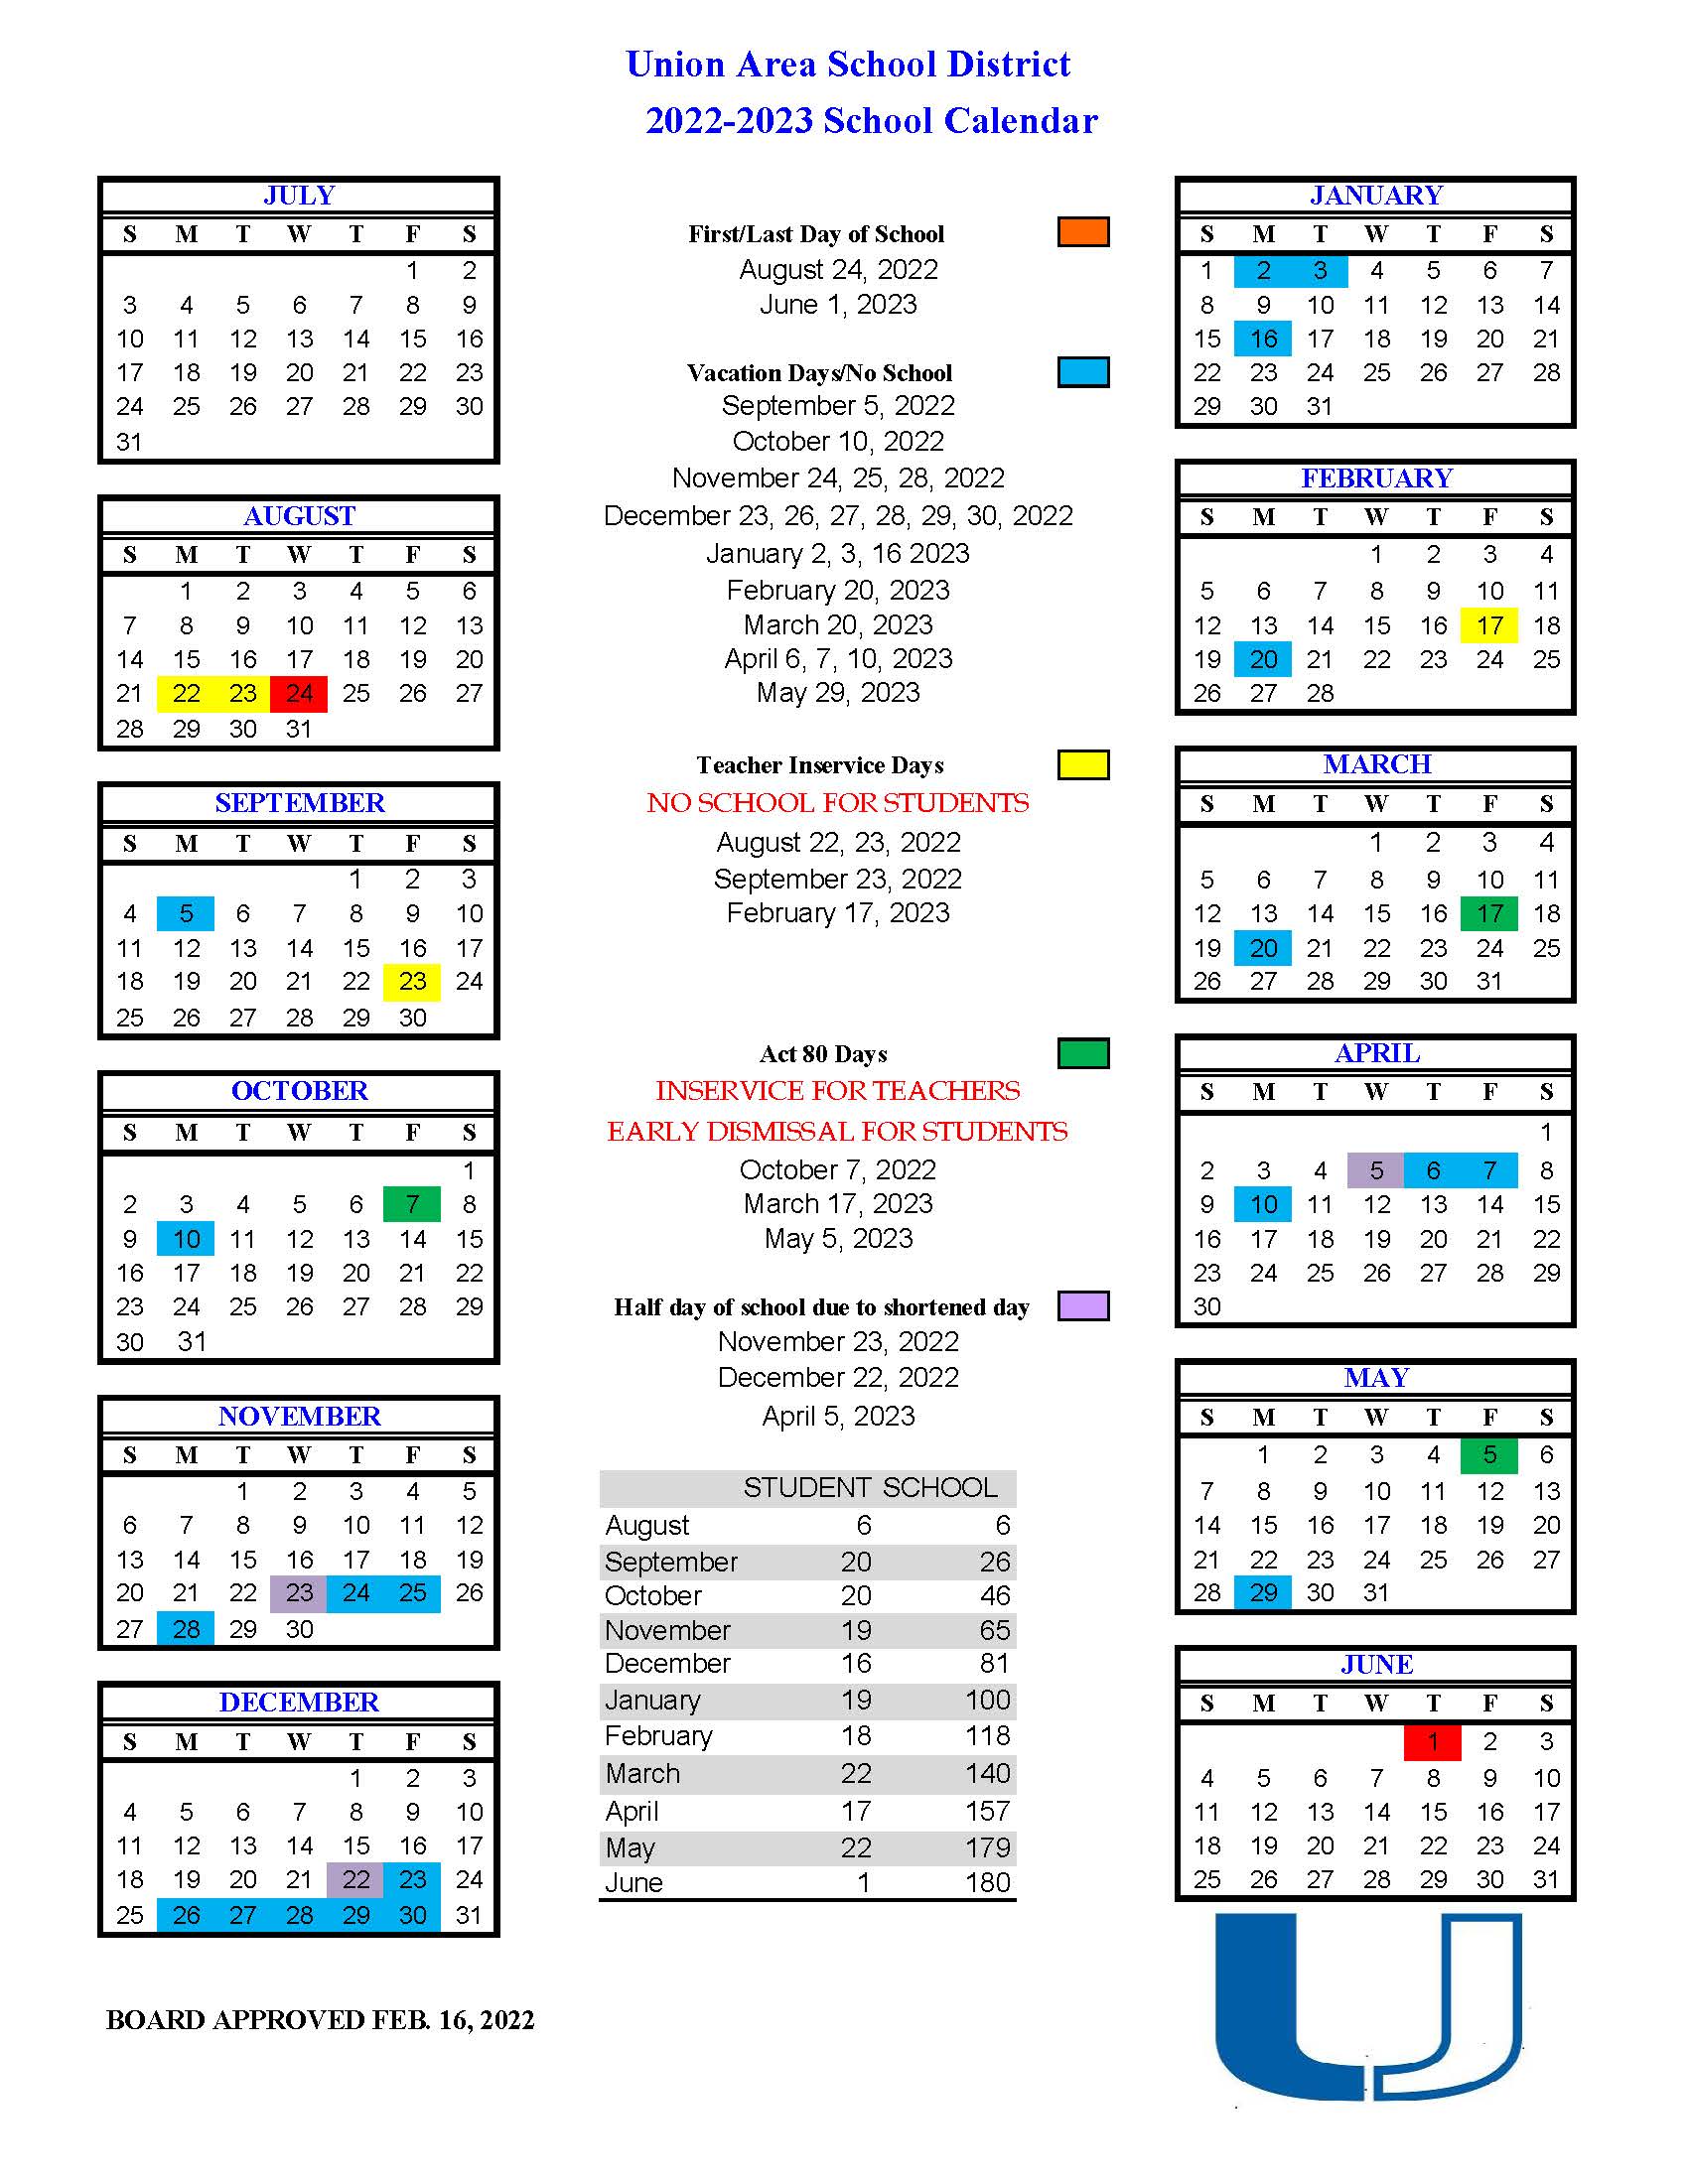 Union Area School District Calendar 2023 And 2024 PublicHolidays